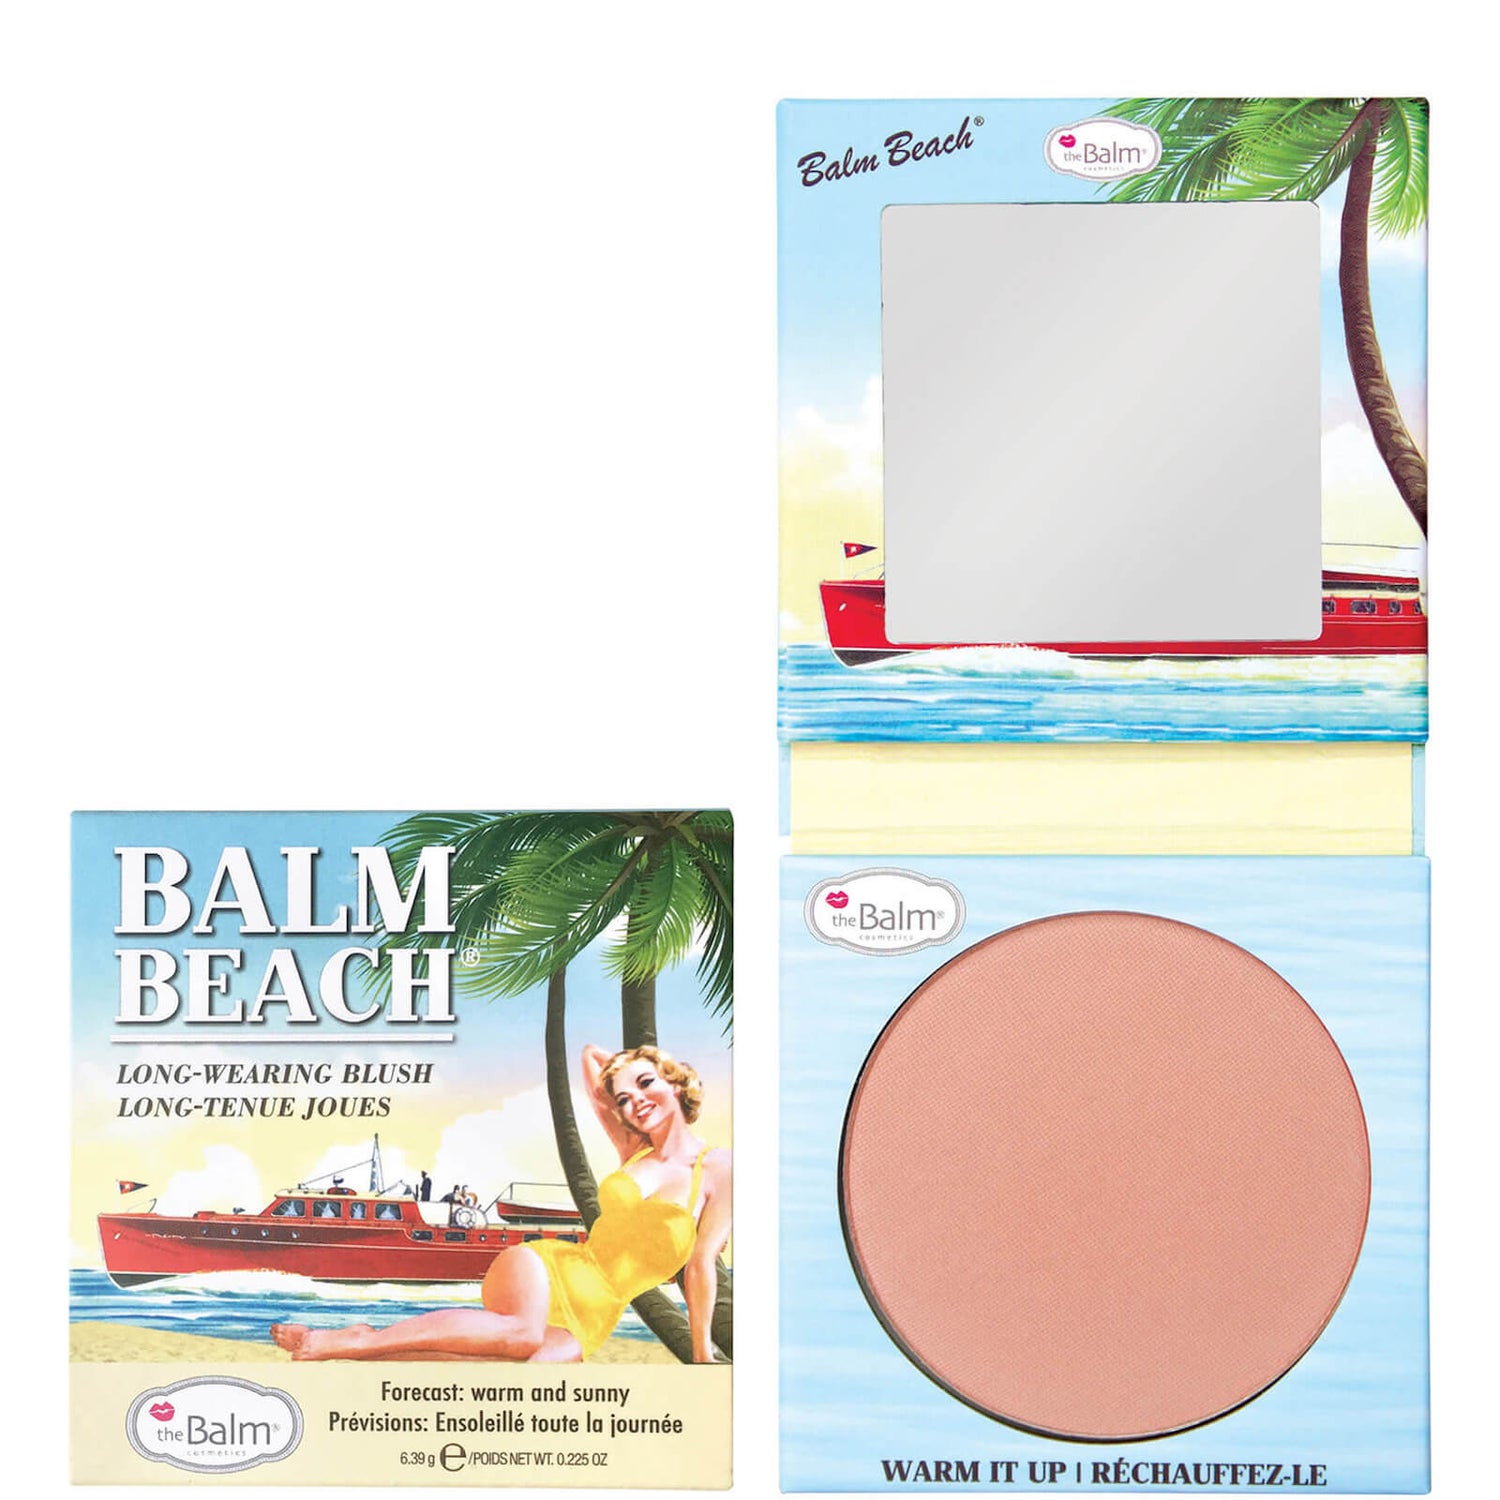 Румяна-бронзер theBalm Balm Beach Long Wearing Blush, оттенок Warm and Sunny